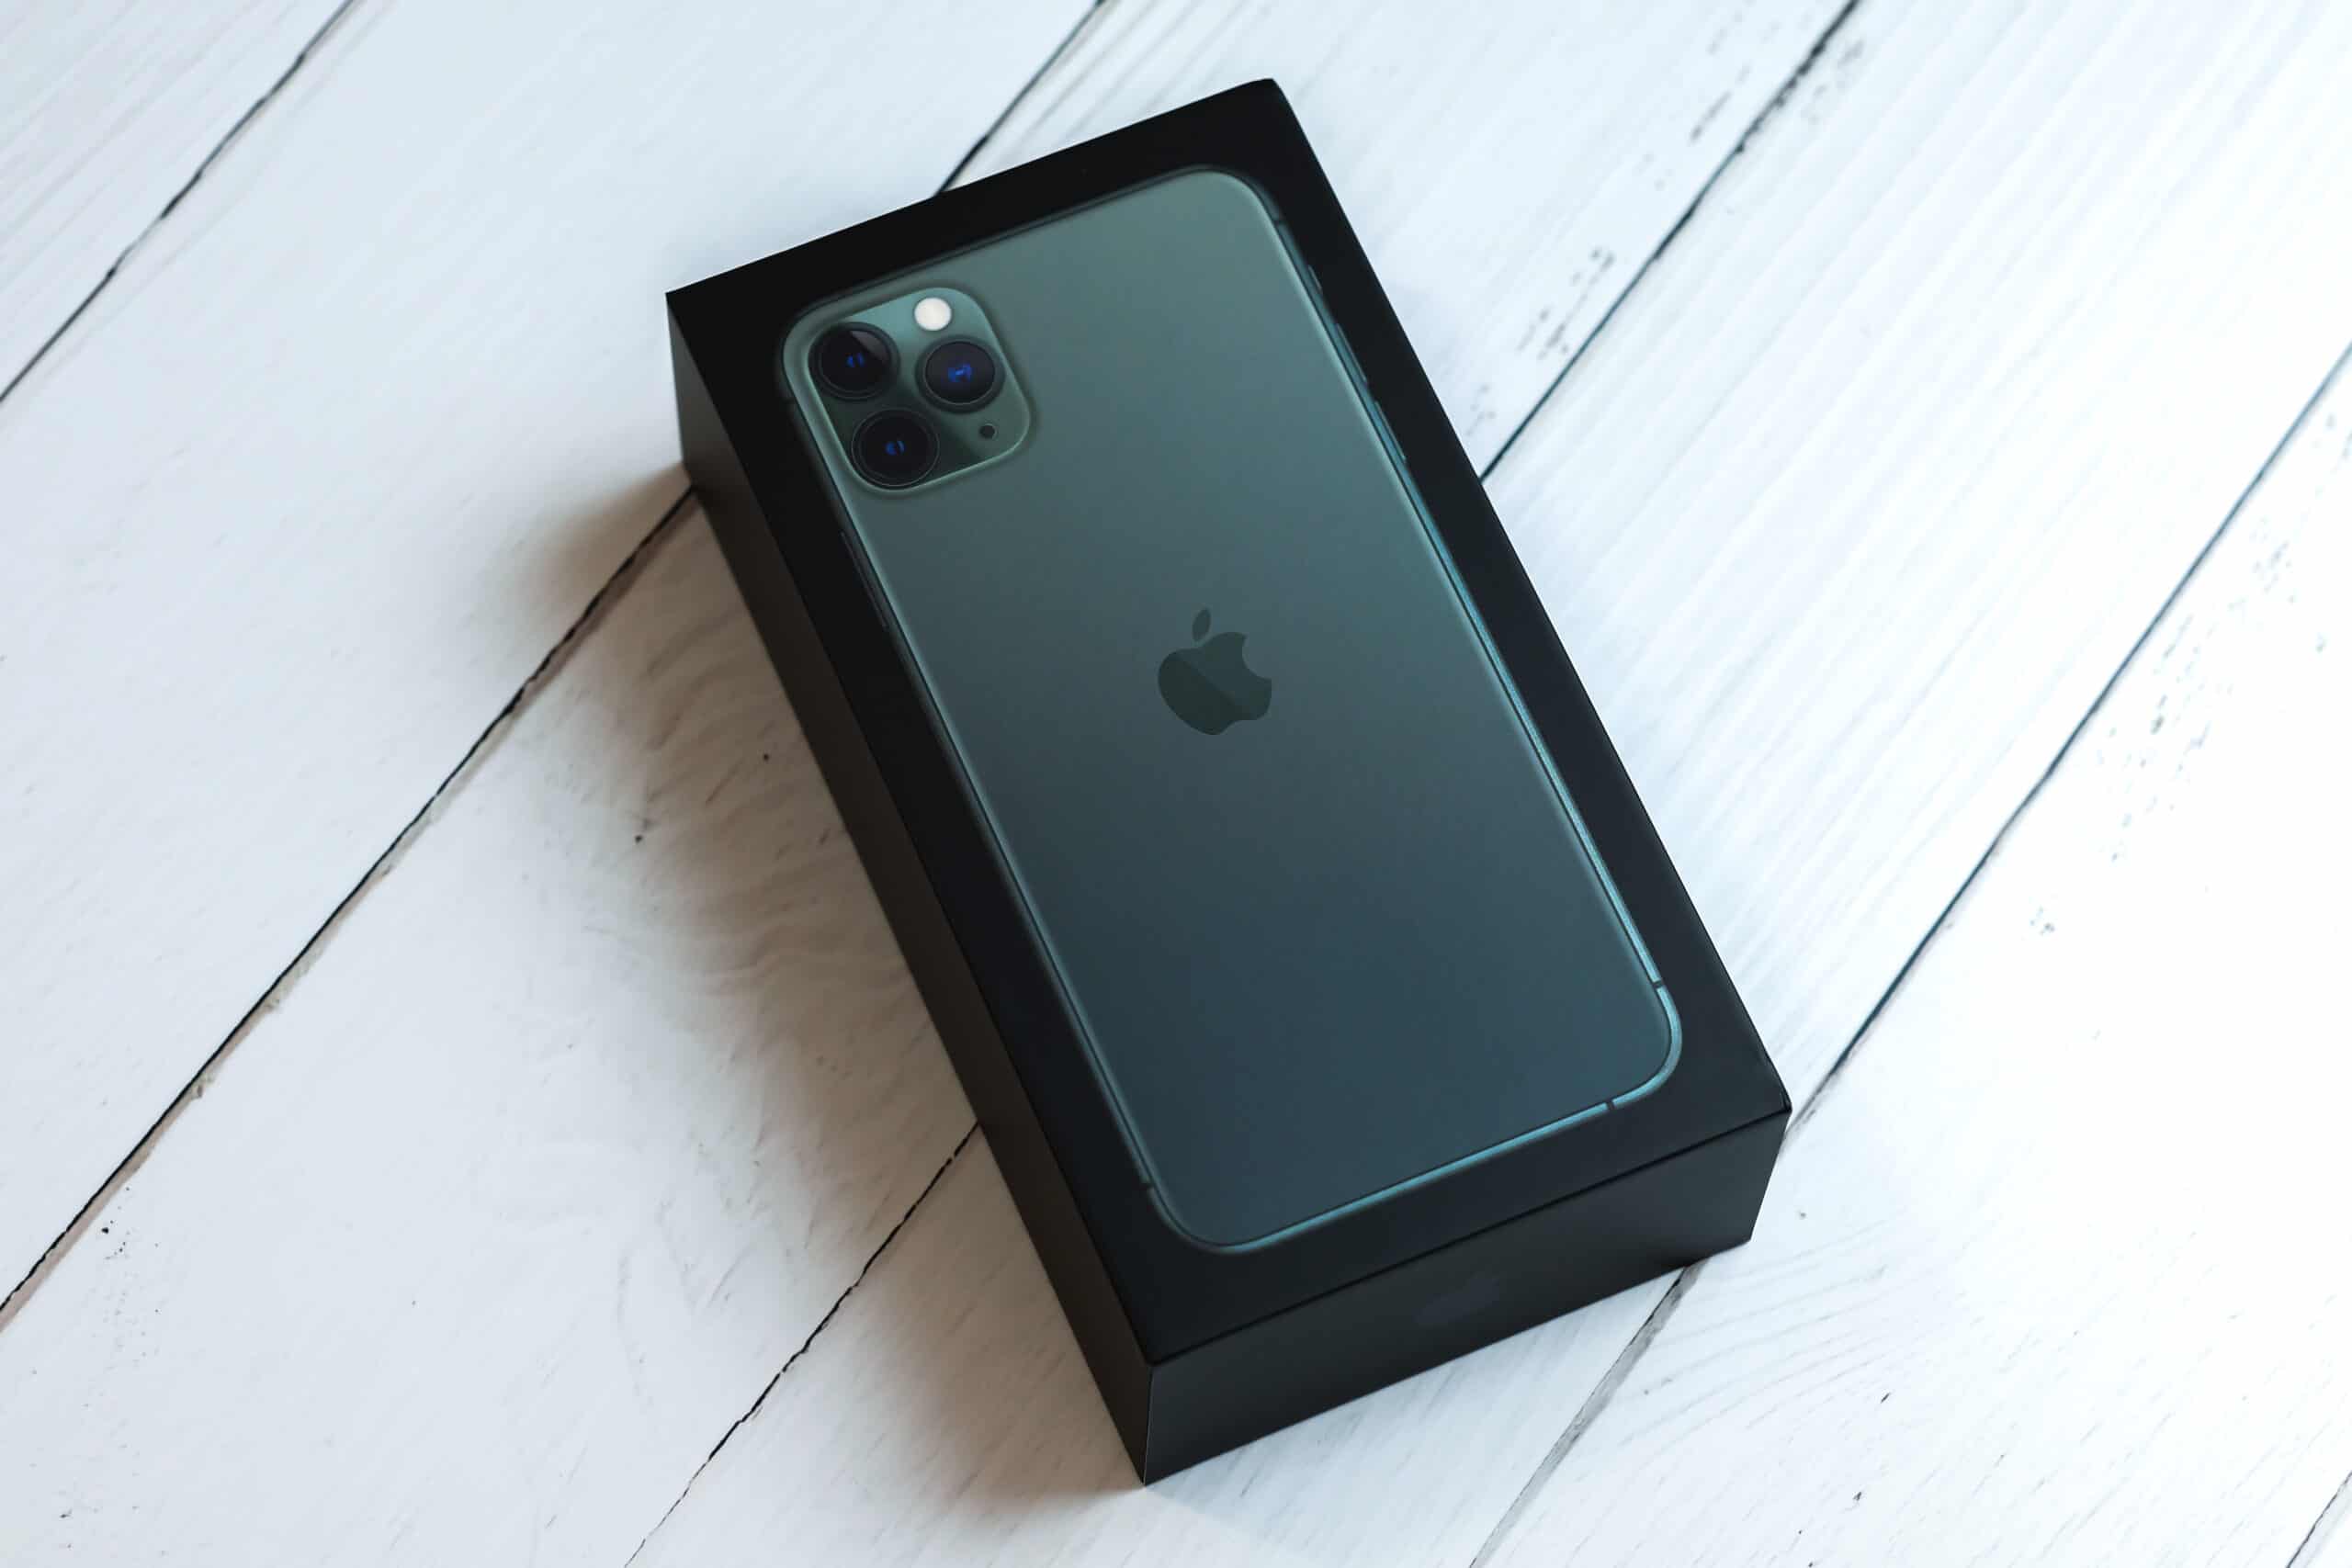 Apple iPhone 11 Pro, 256gb, Midnight Green - Unlocked (Renewed)